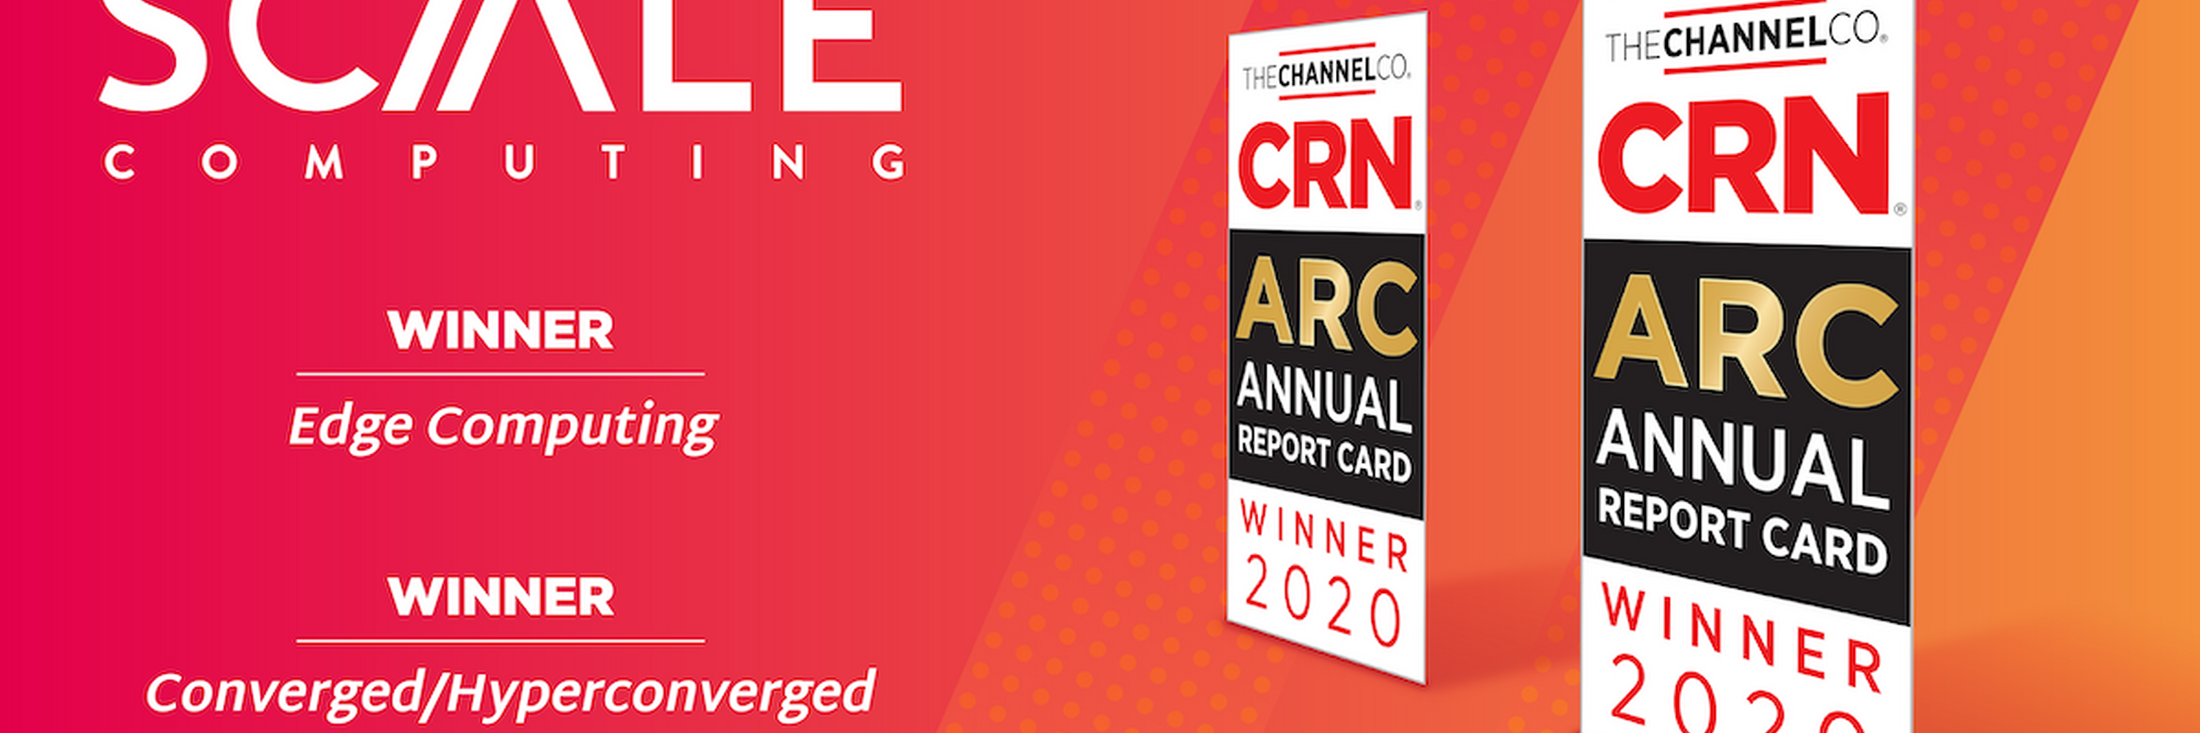 CRN annual report card 2020